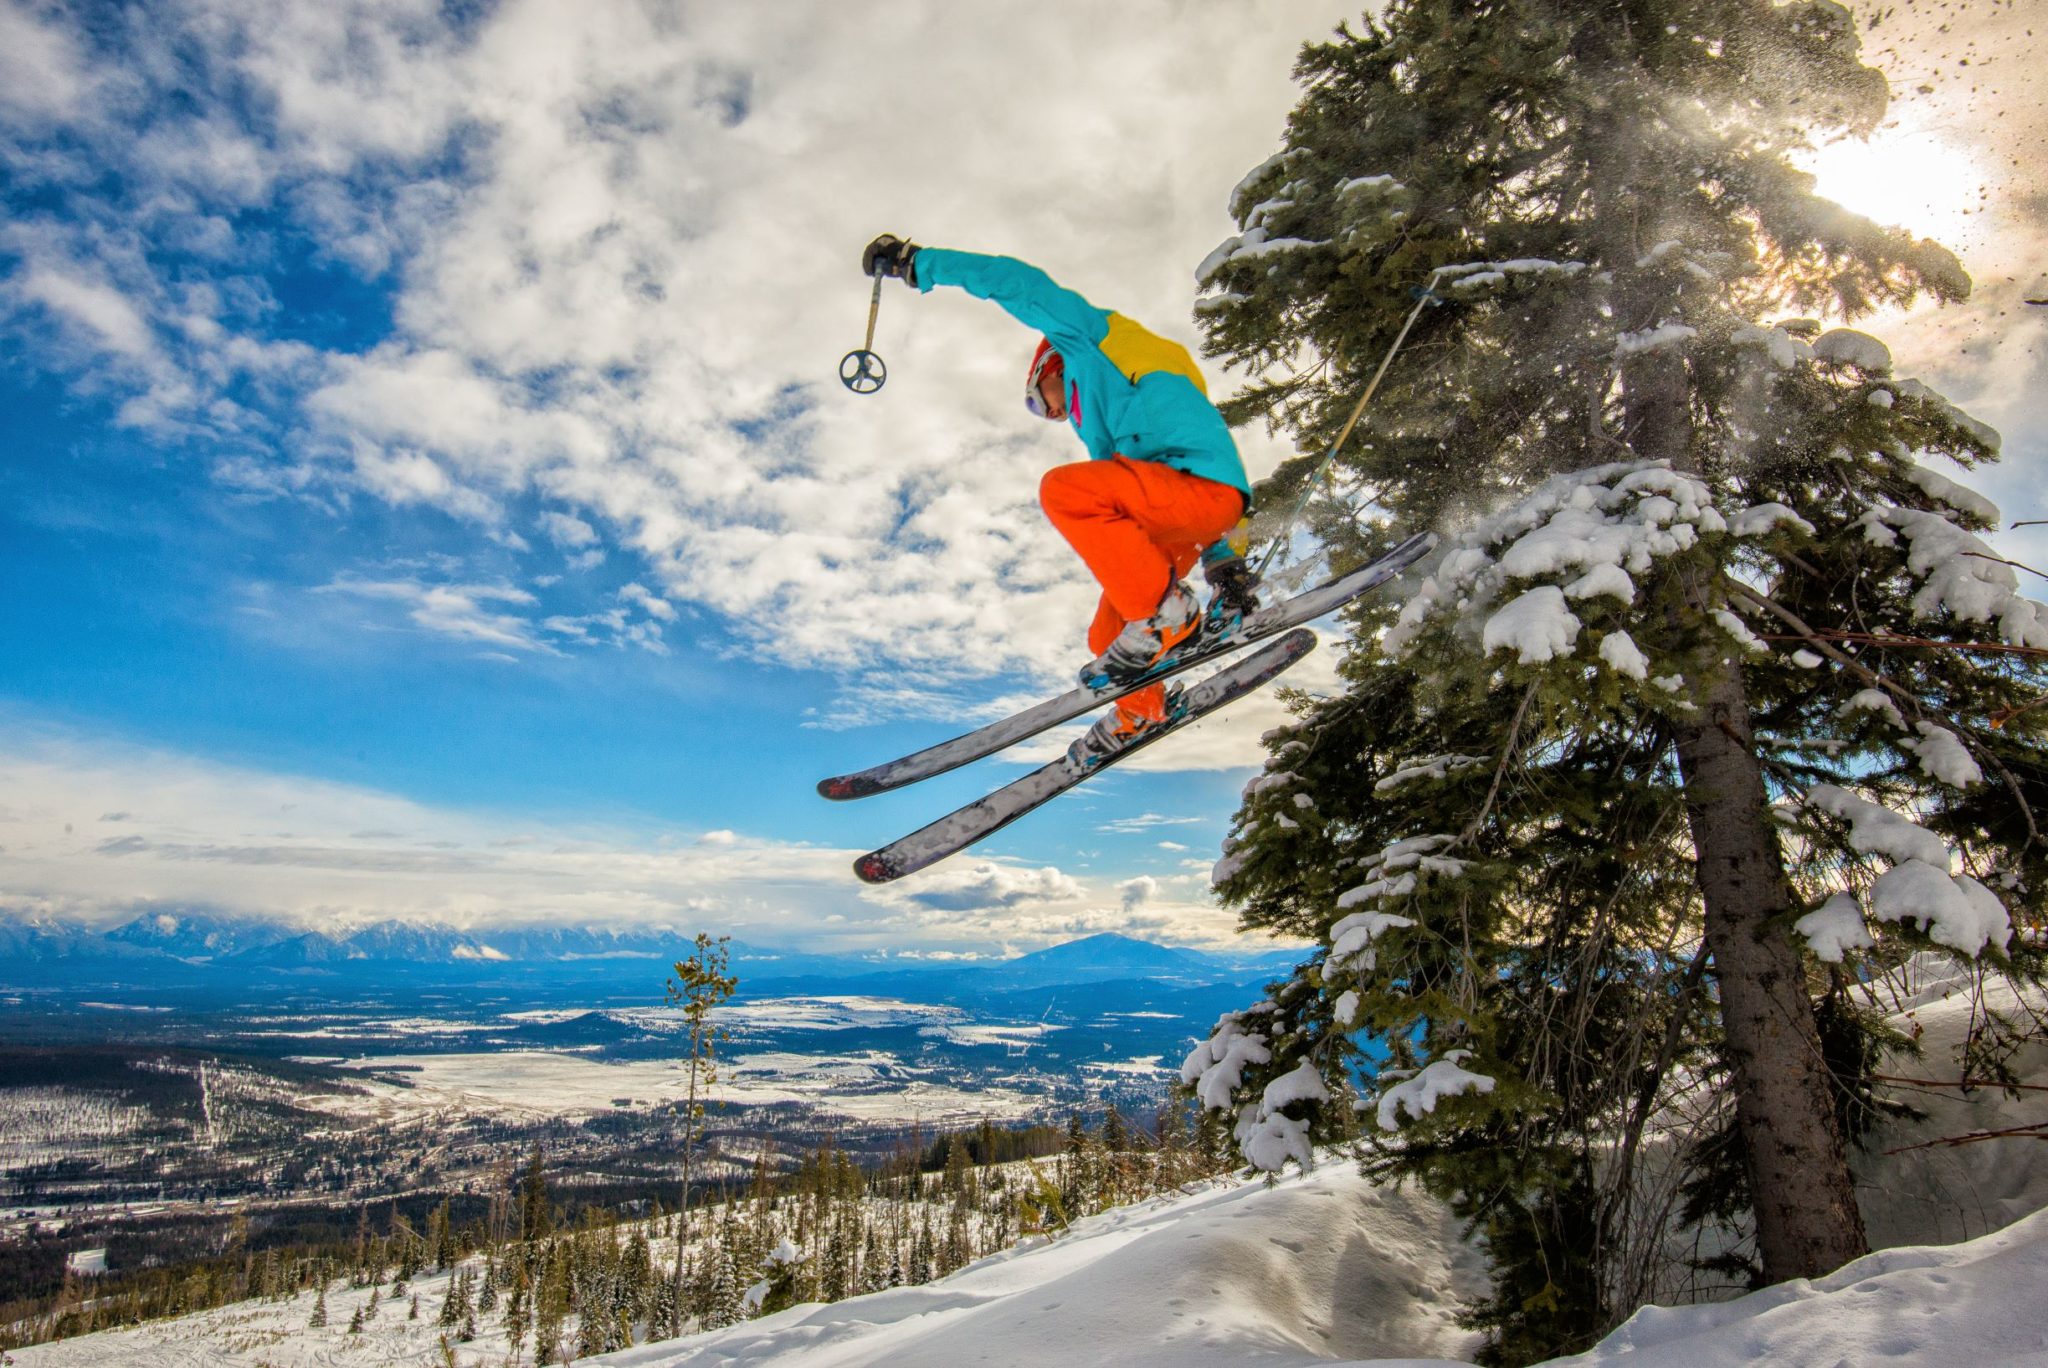 skier jumping into powder snow